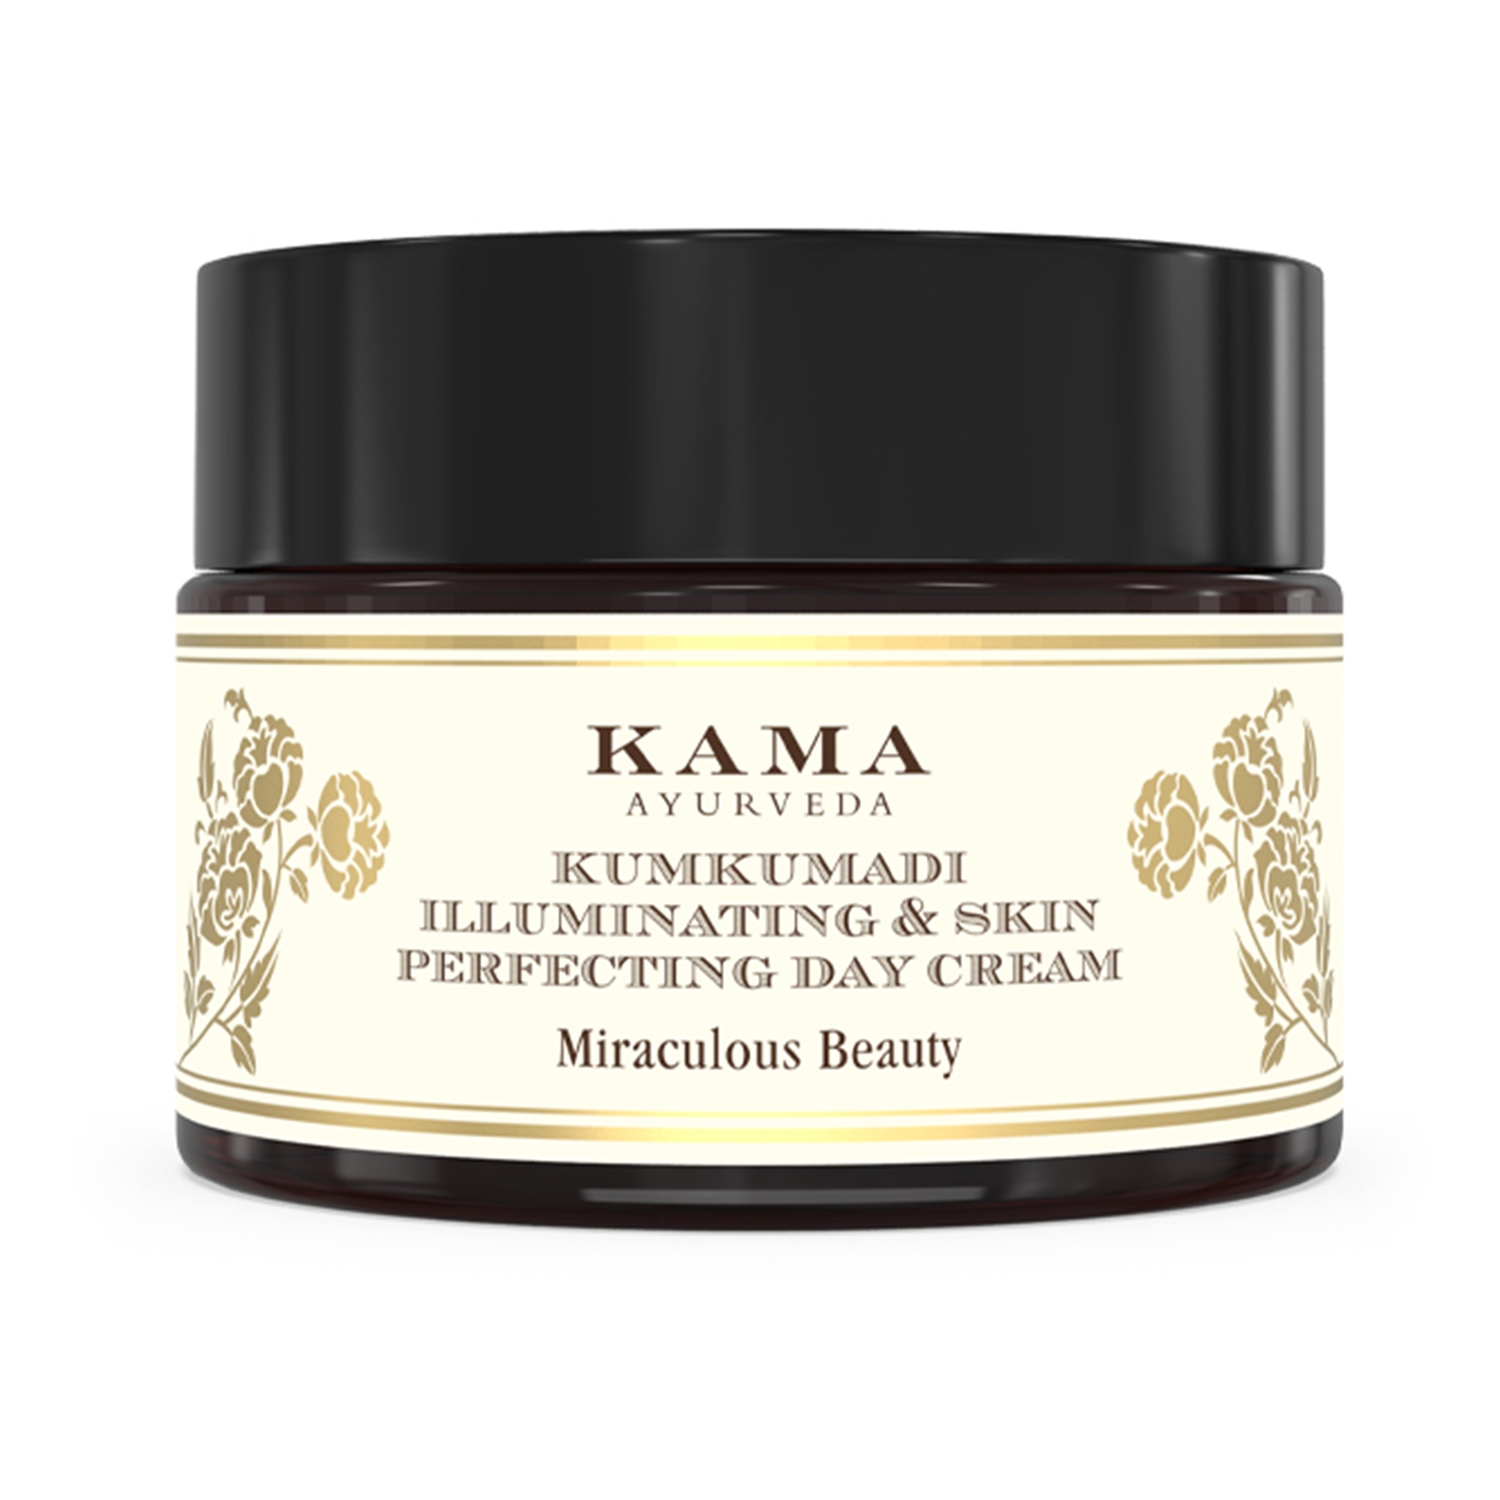 Kama Ayurveda | Kama Ayurveda Kumkumadi Illuminating & Skin Perfecting Day Cream (50g)